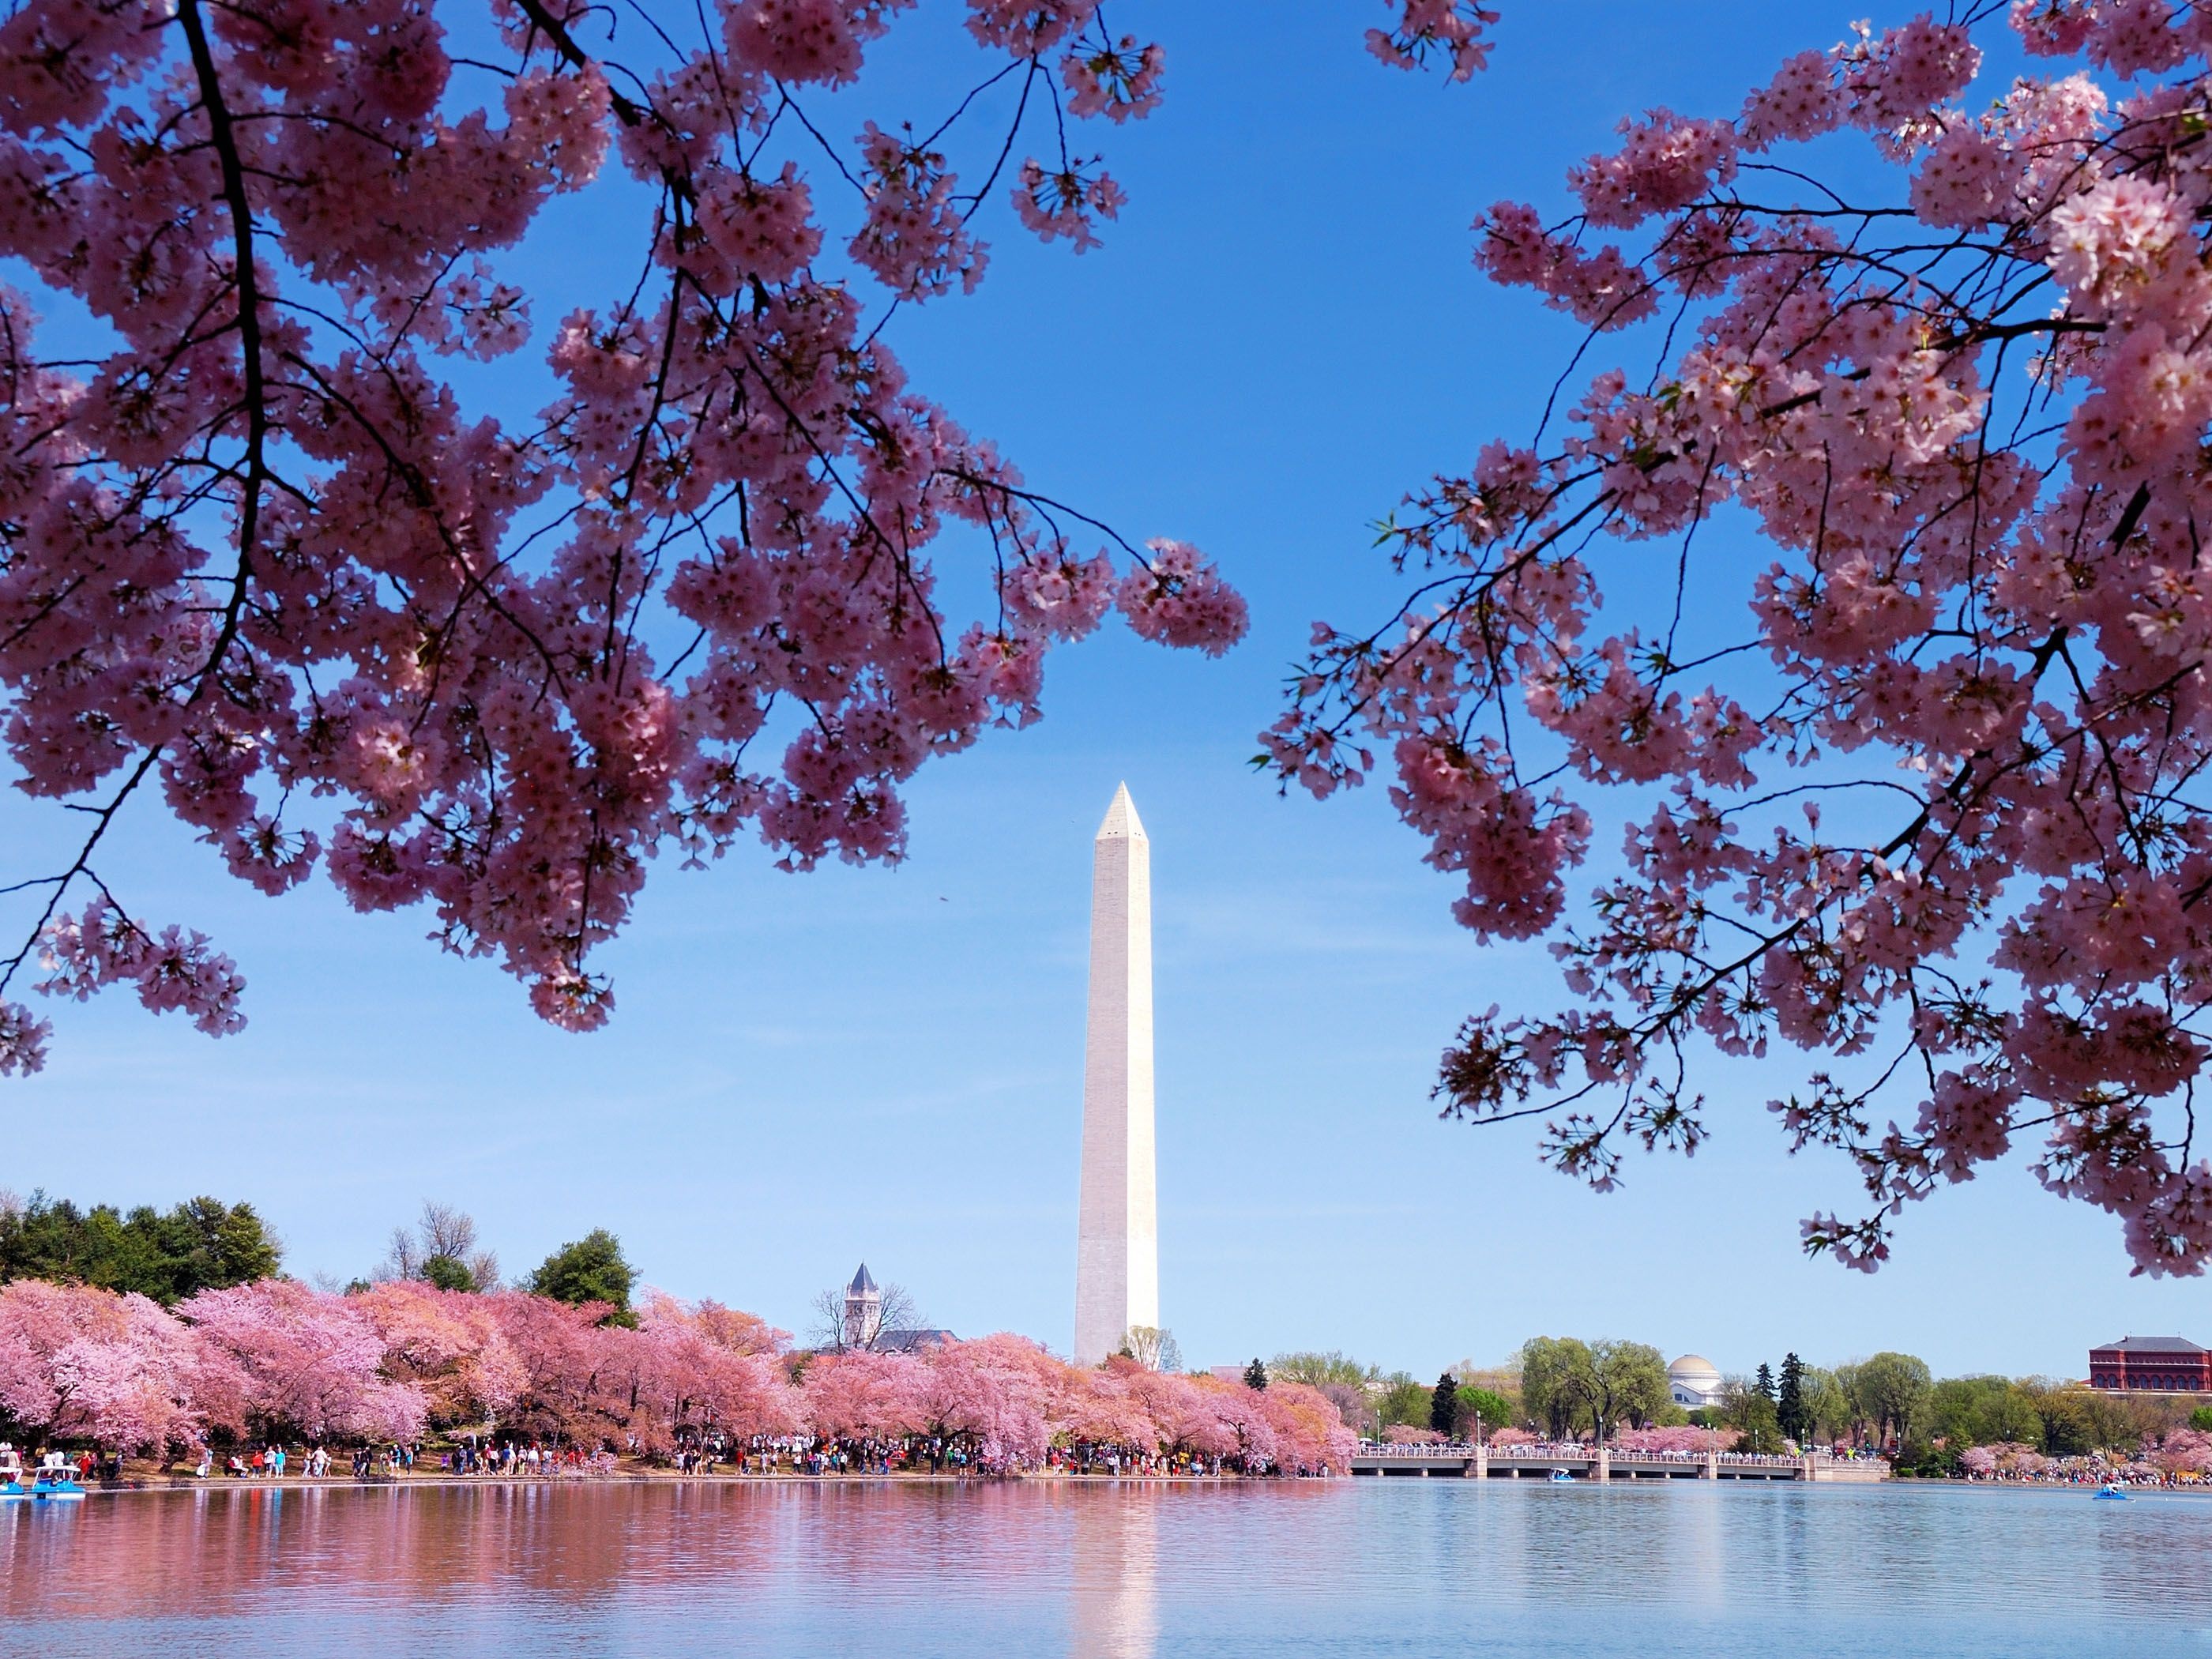 Washington, D.C.: Cherry blossom, Washington Monument. 2800x2100 HD Wallpaper.